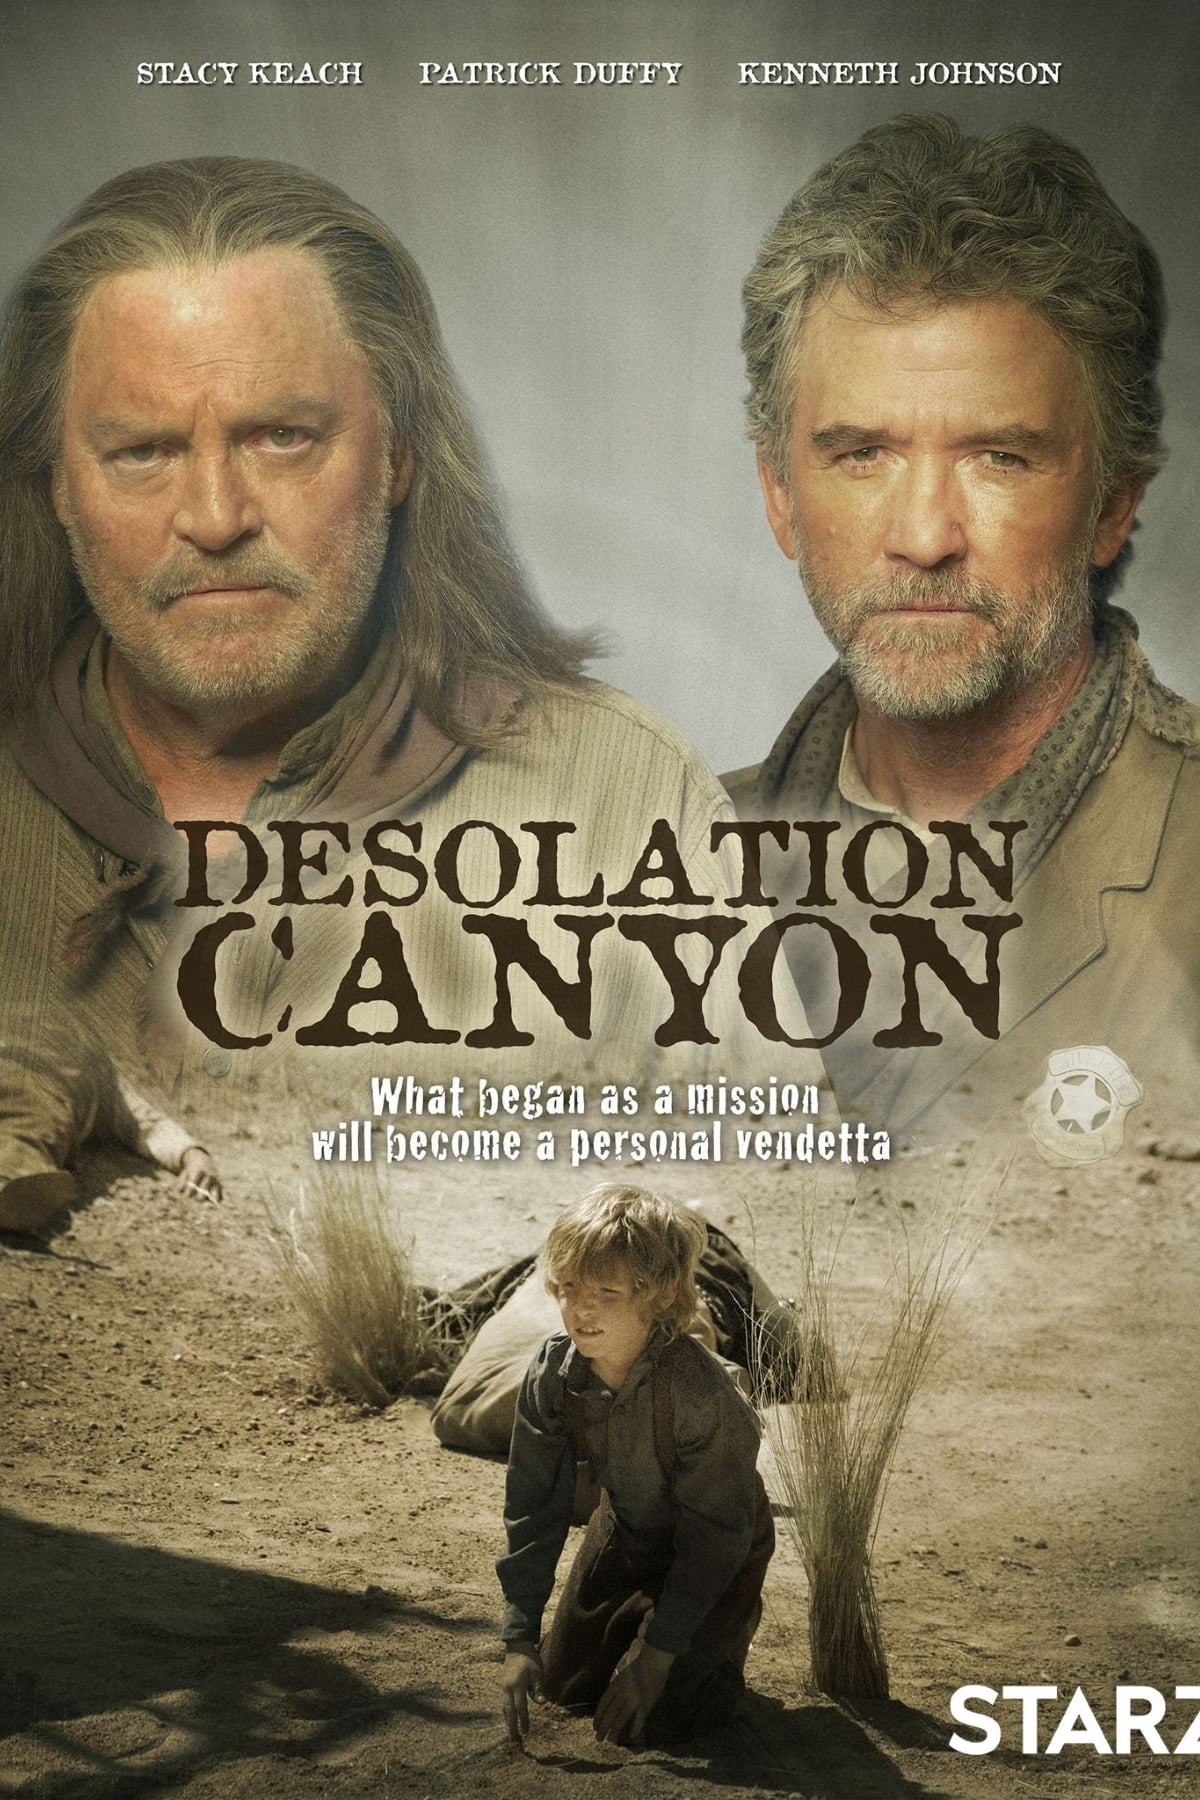 Desolation Canyon (2006)